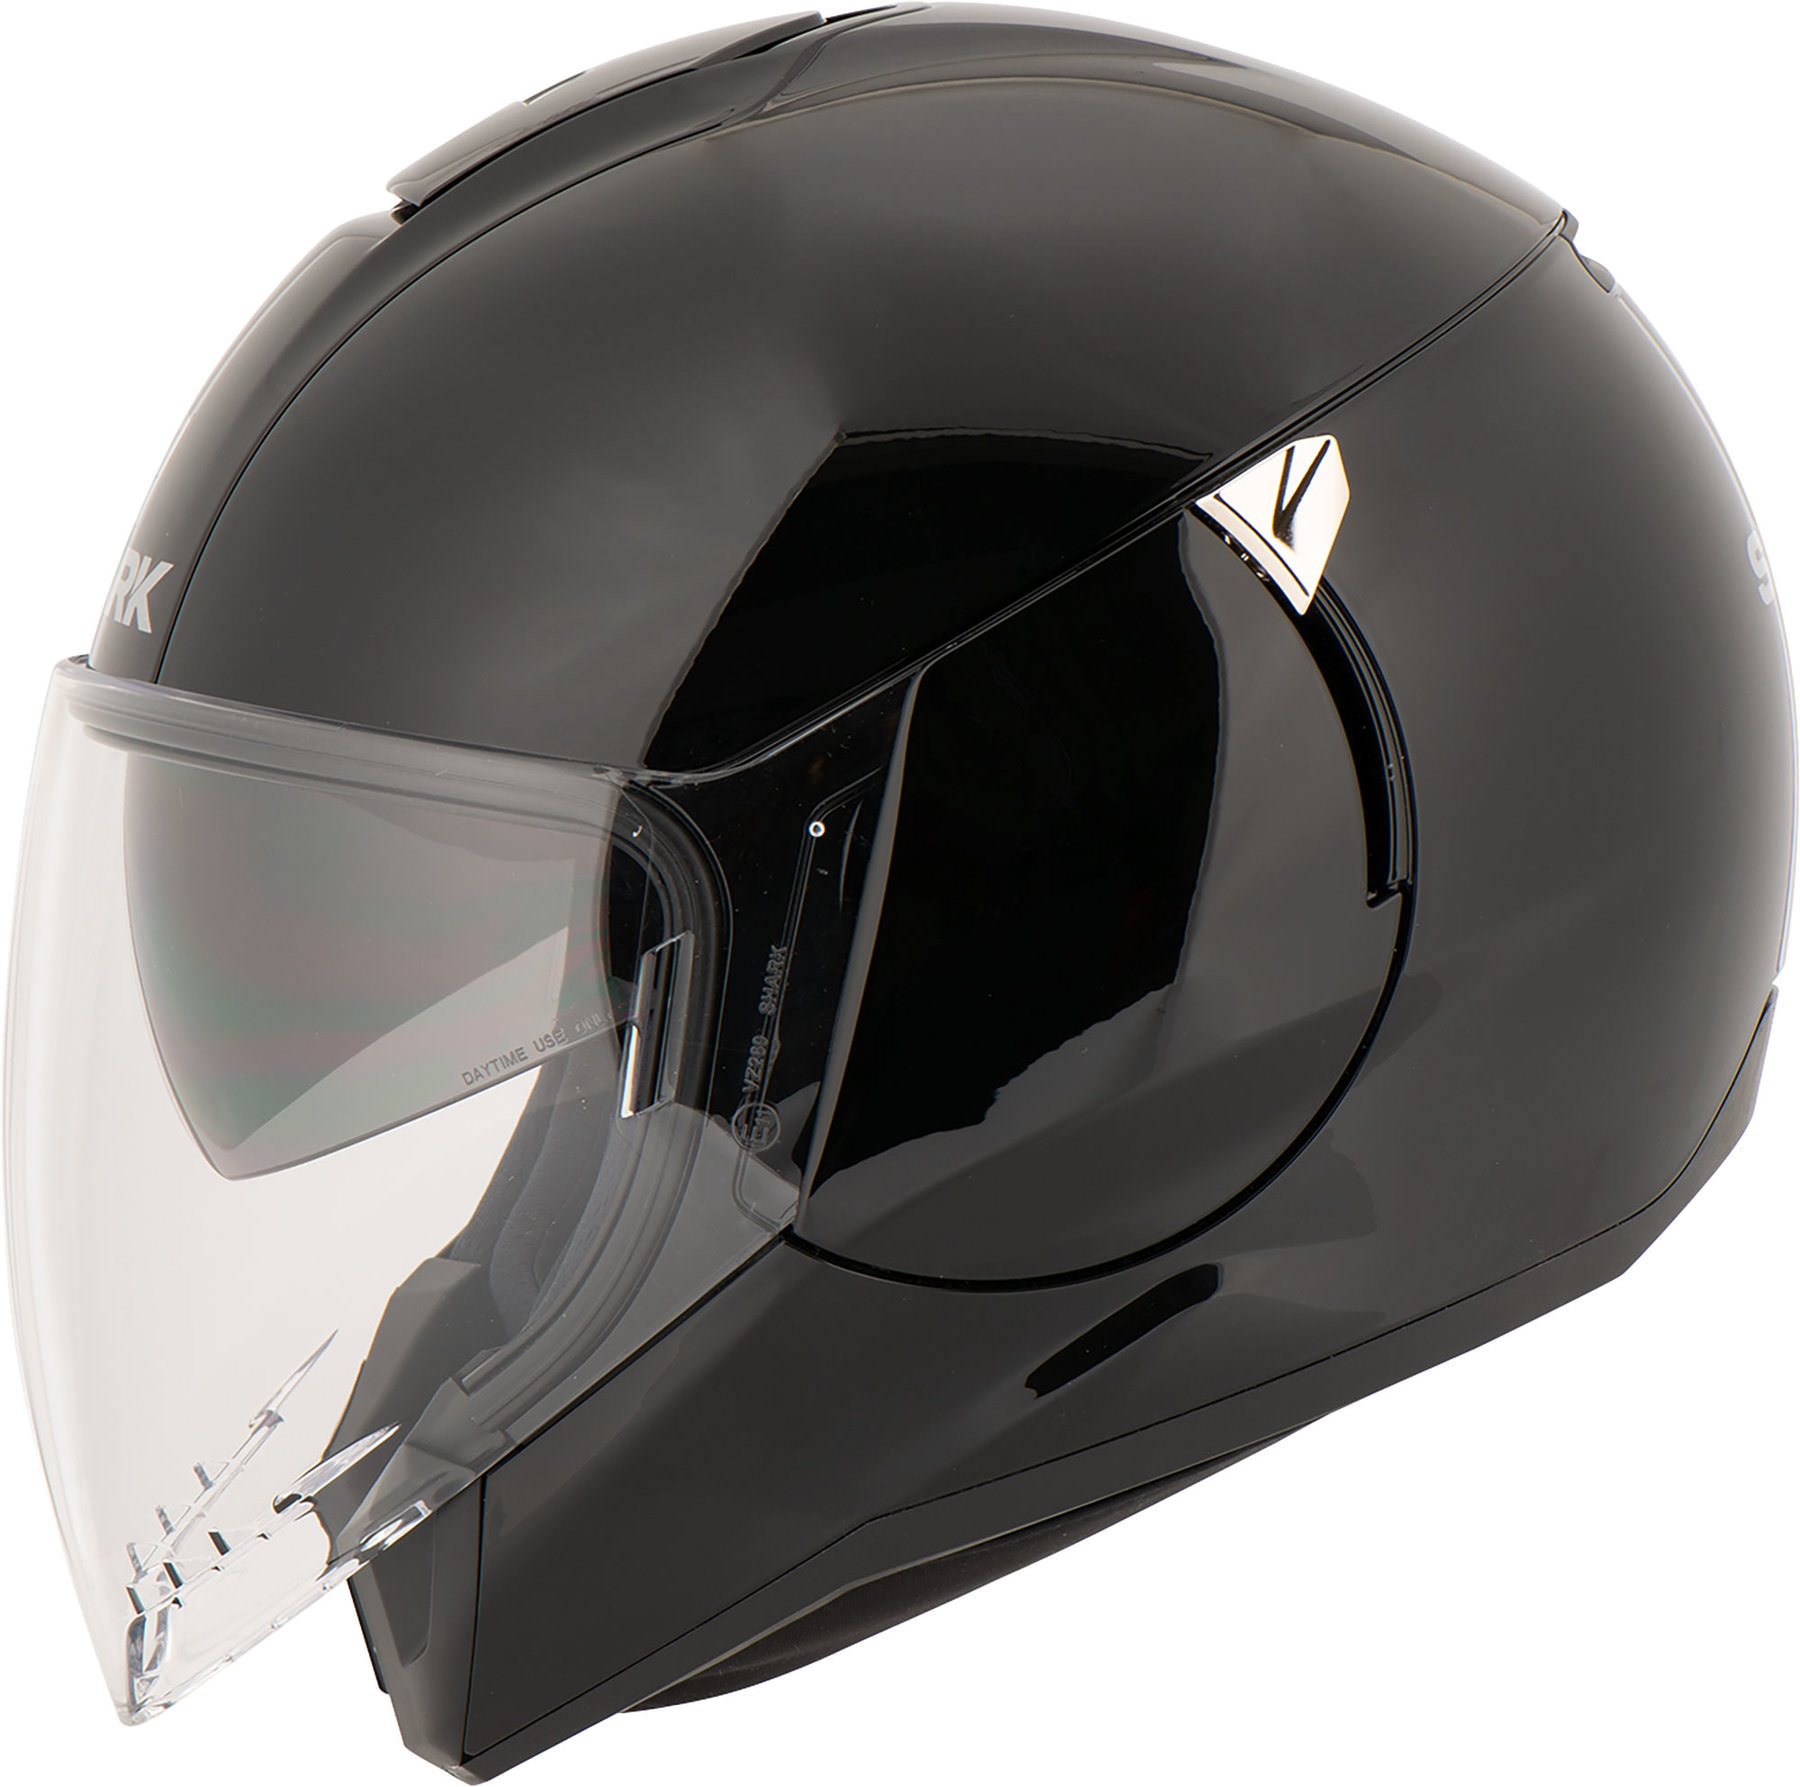 helmet glass online purchase